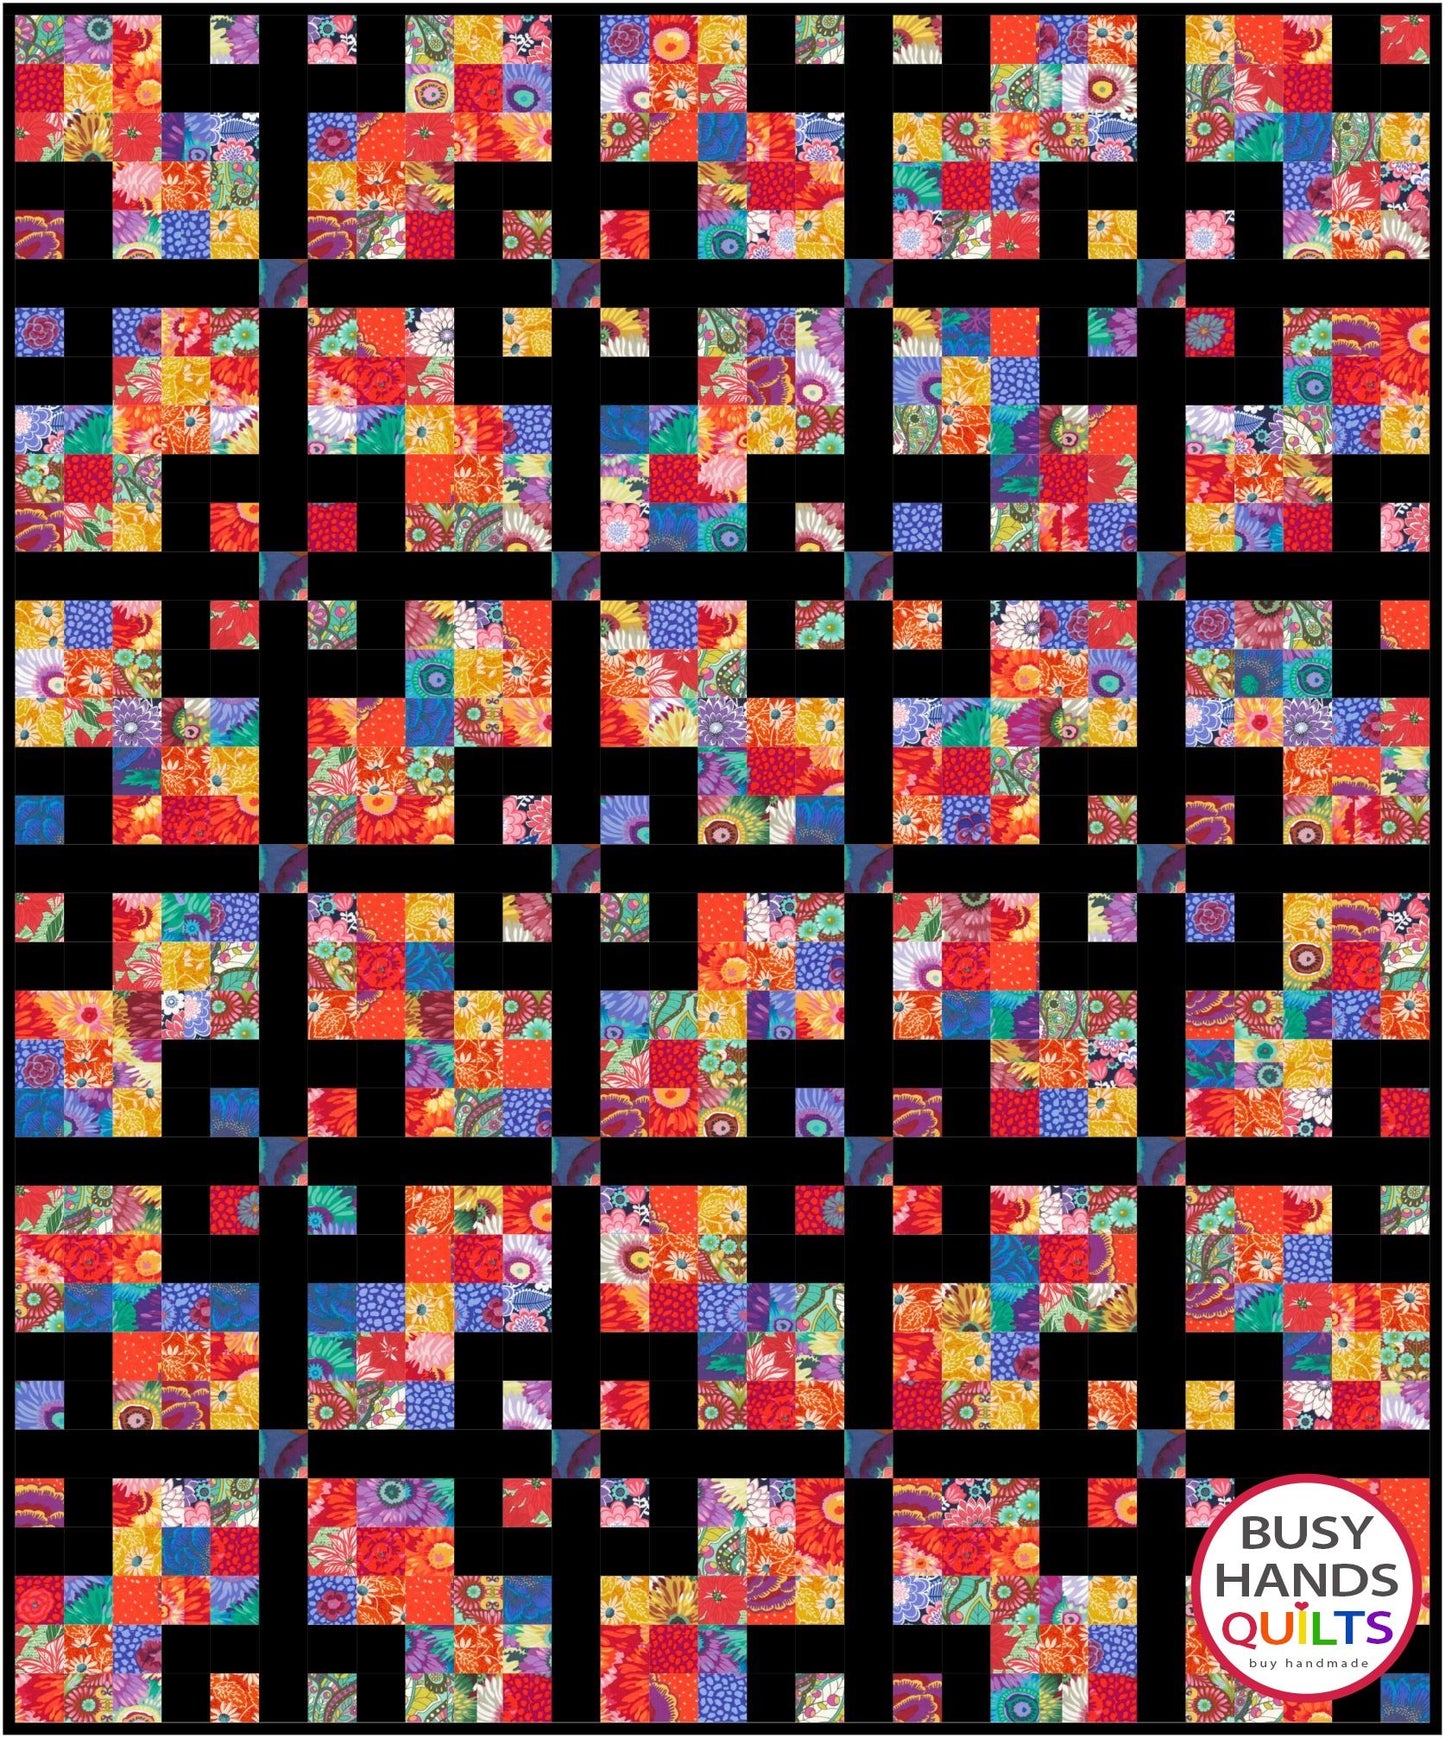 Grid Pop Quilt Pattern PRINTED